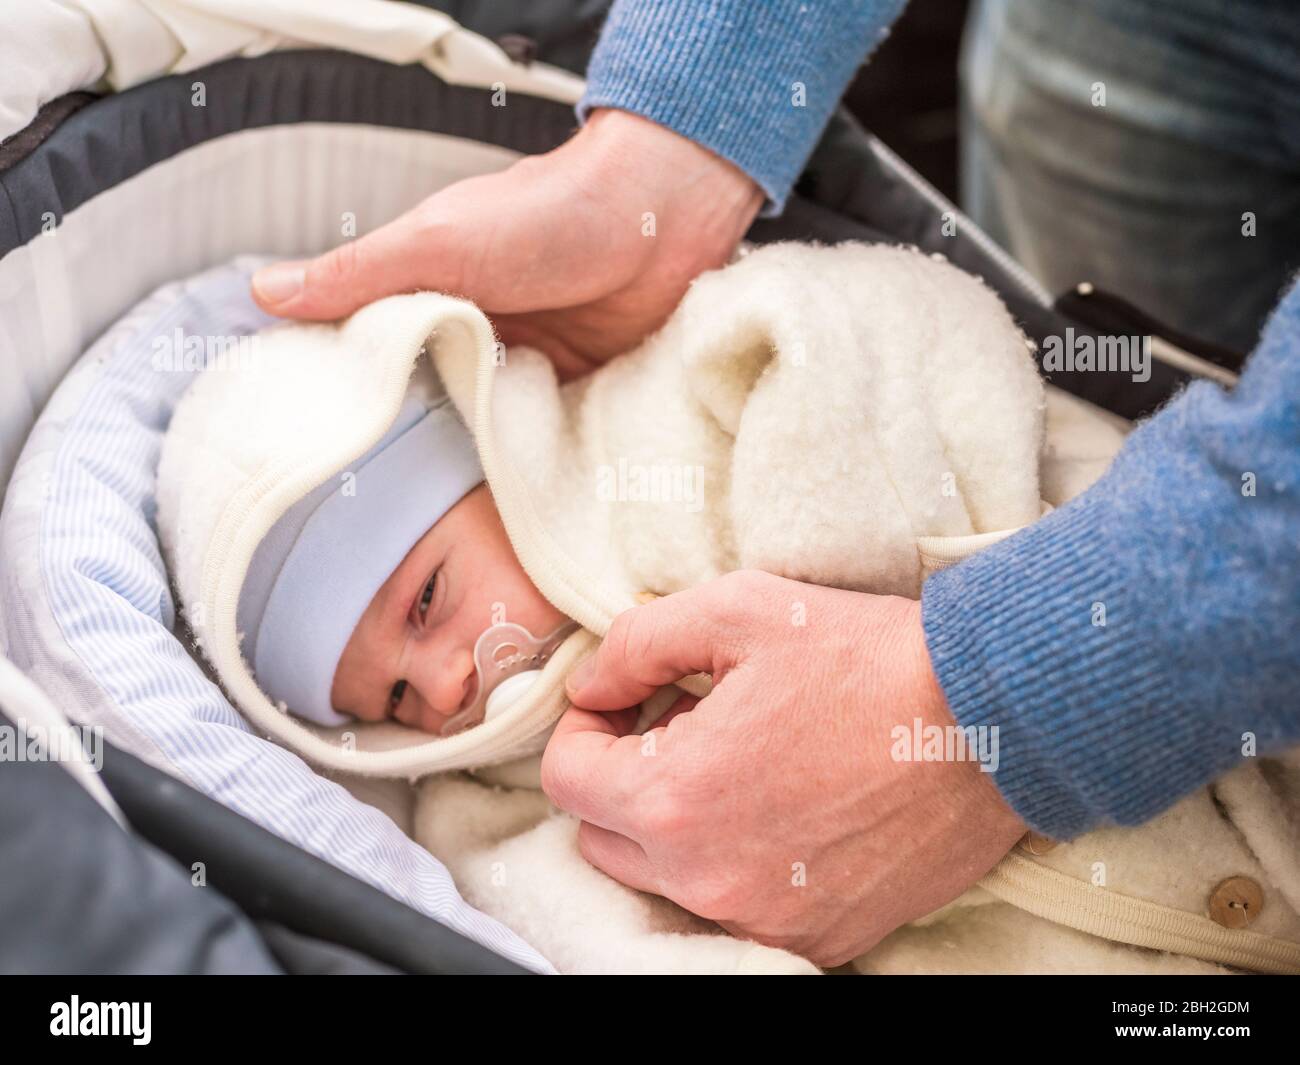 how to put baby in pram